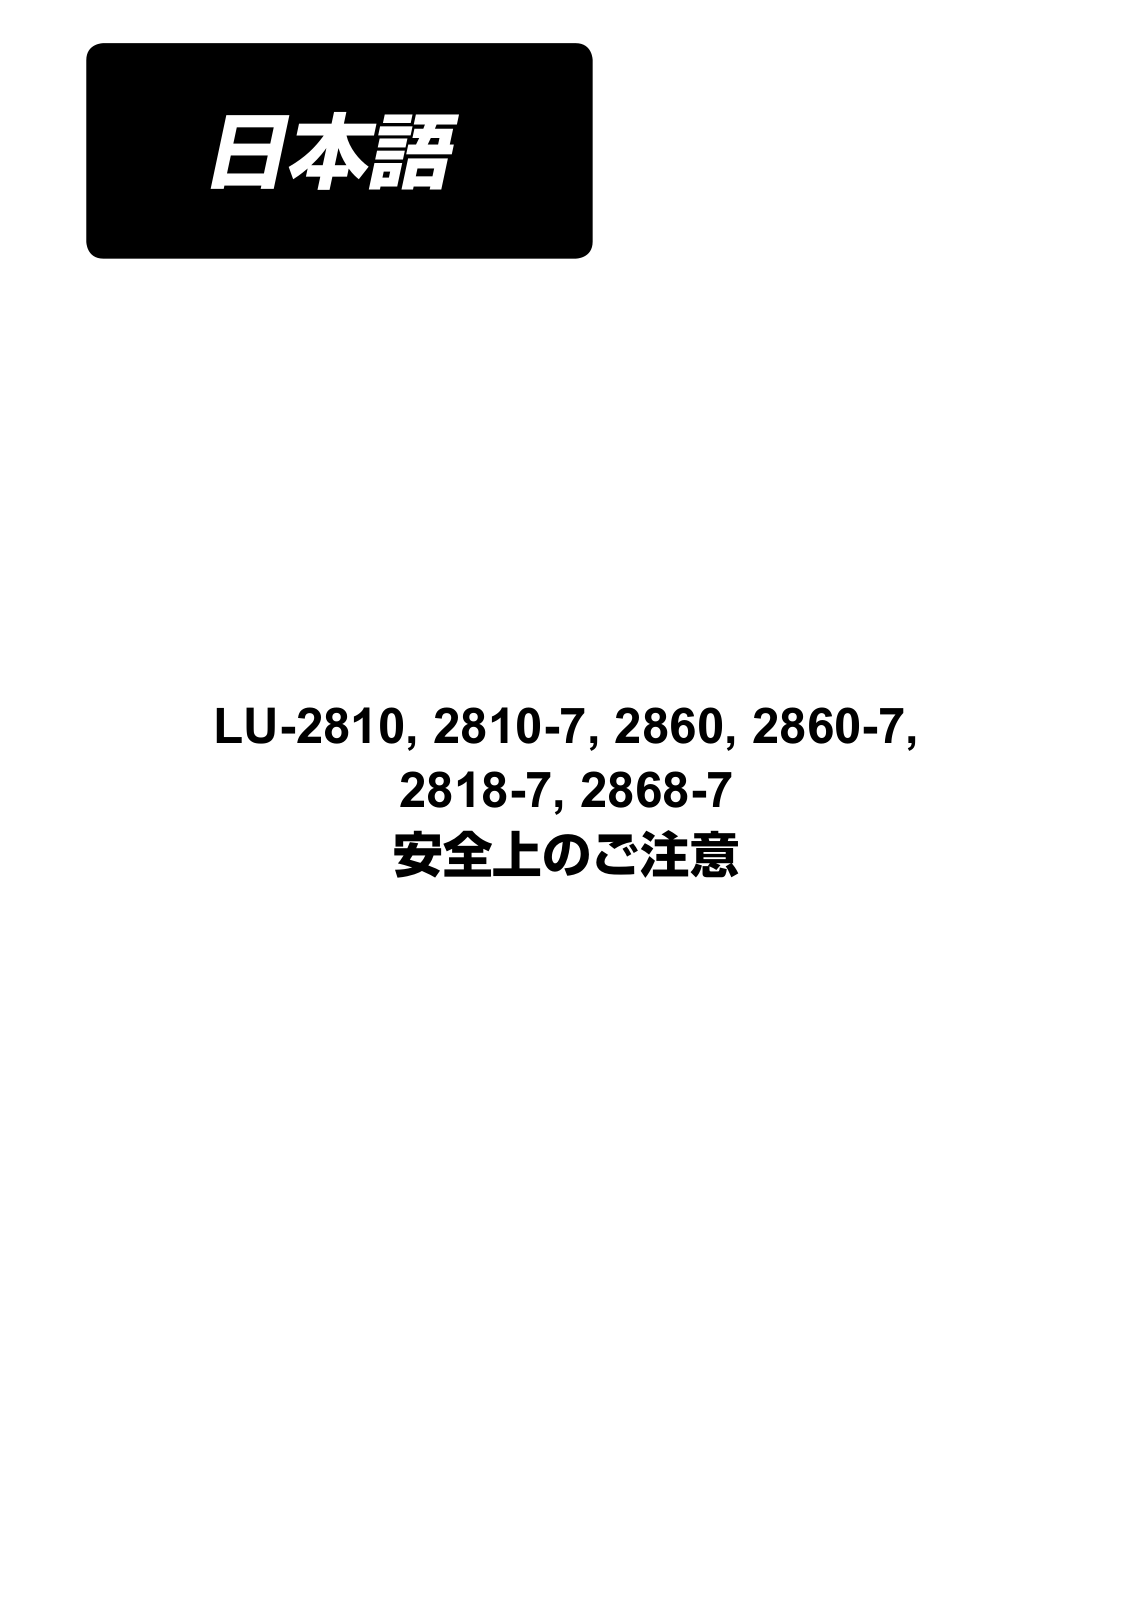 JUKI LU-2868-7, LU-2818-7, LU-2860-7, LU-2860, LU-2810-7 Instruction Manual